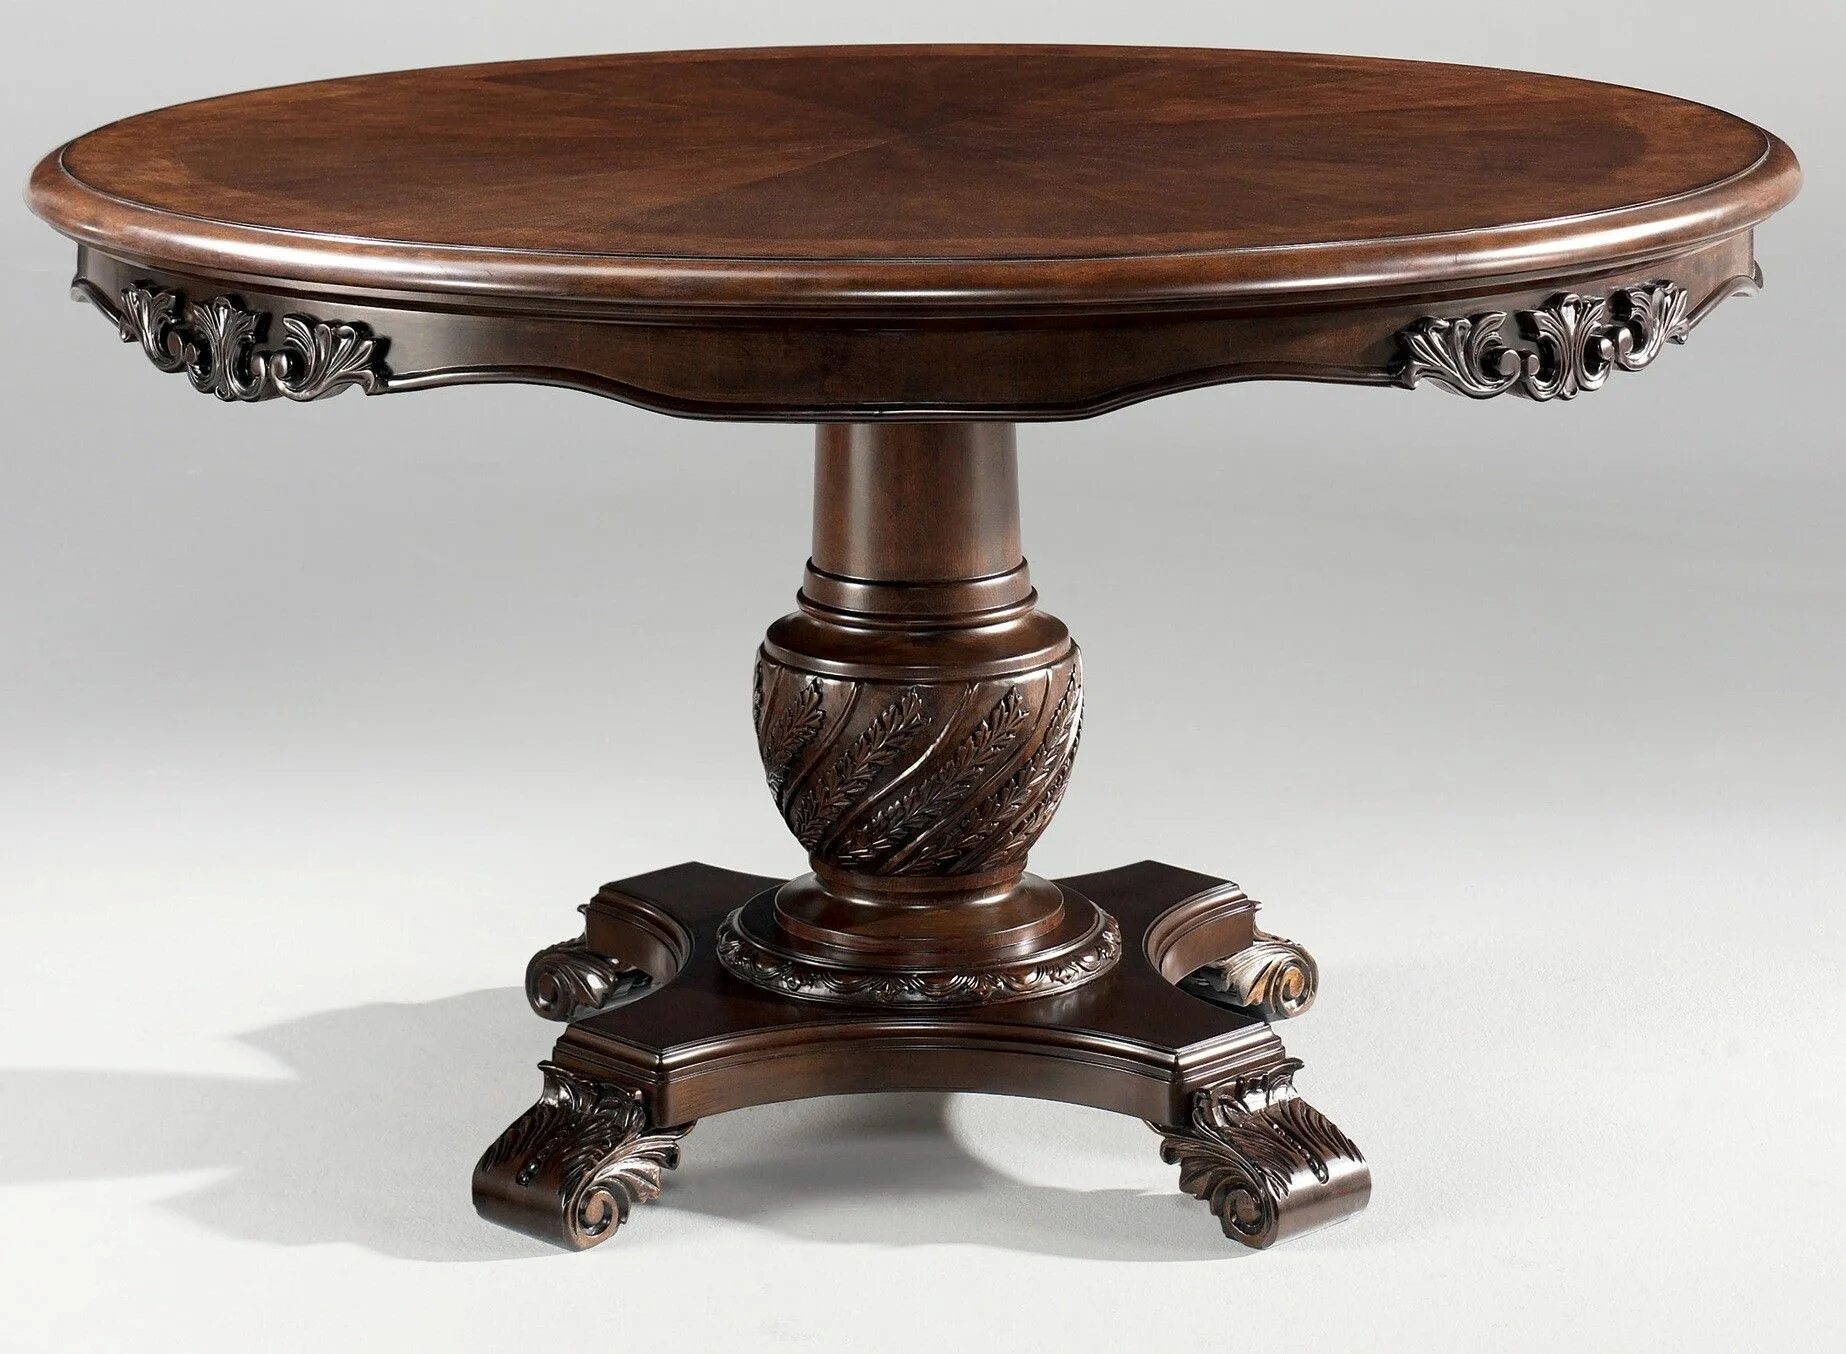 Круглый стол ORDT-d6060-SPR. Стол Lakri Round Table. Ashley North Shore стулья. Круглый деревянный стол. Красивые круглые столы